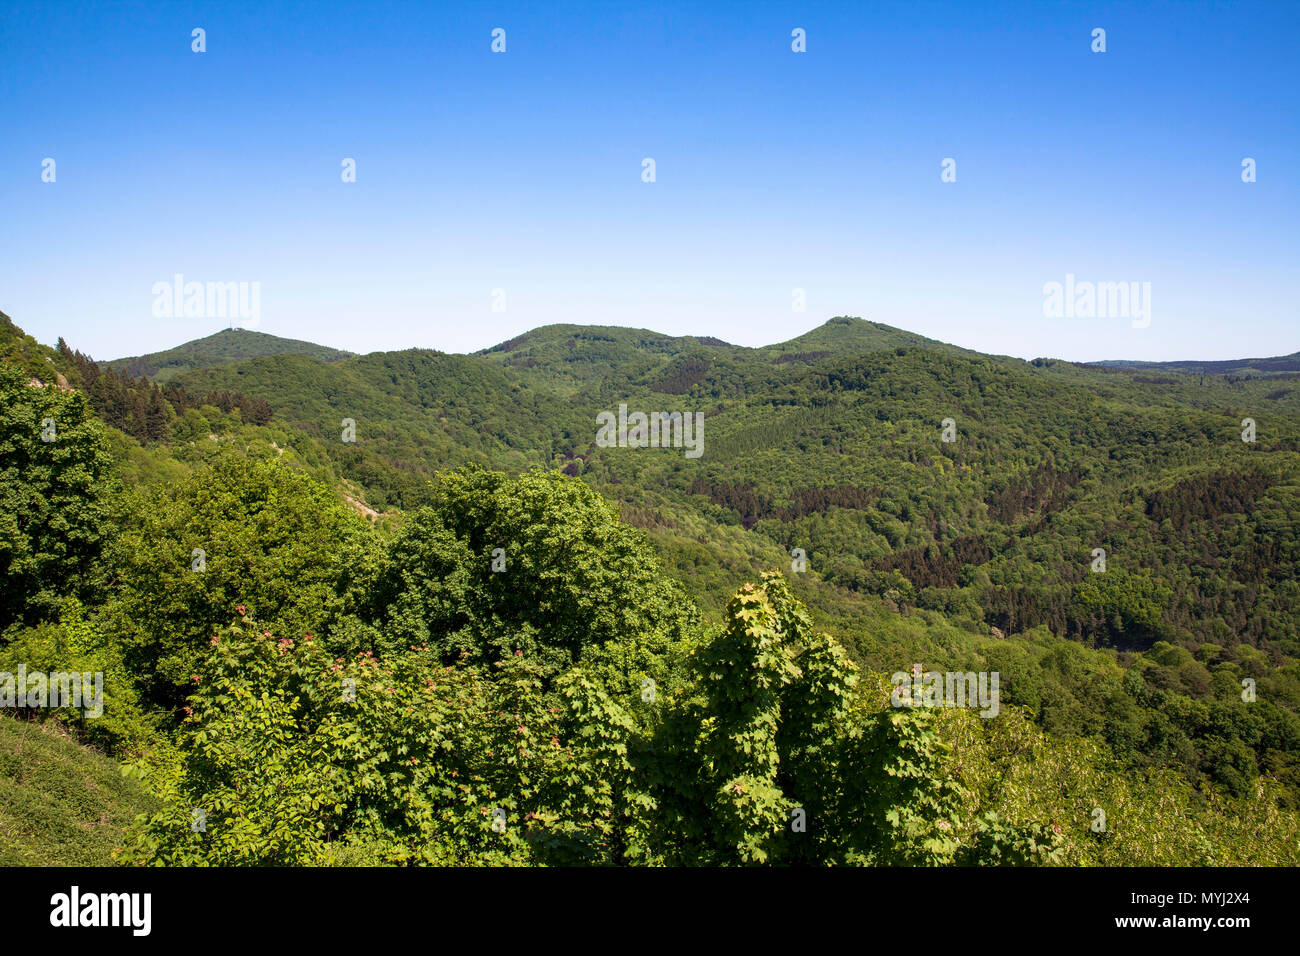 Germany, Siebengebirge, the arboreous hills of the natural park Siebengebirge near Koenigswinter.  Deutschland, Siebengebirge, die bewaldeten Huegel d Stock Photo